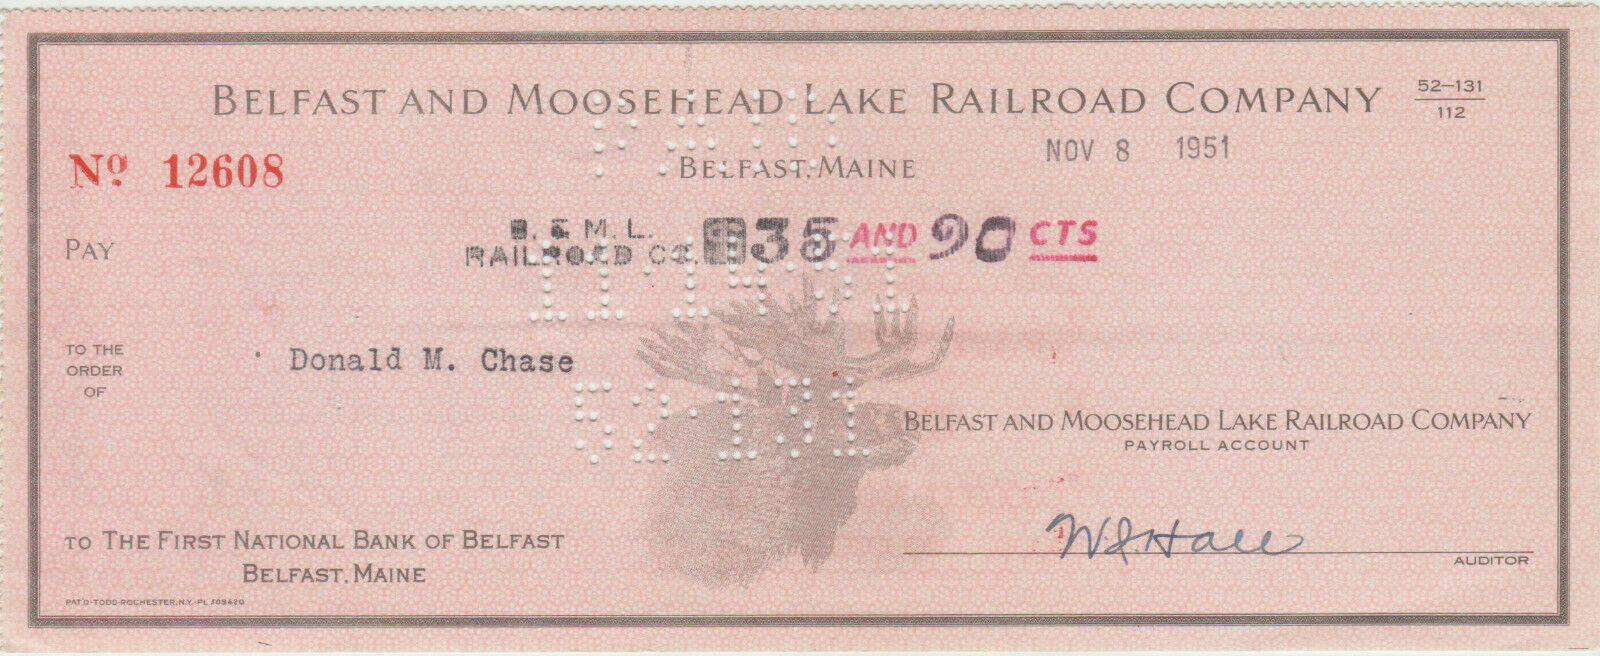 NOVEMBER 1951 BELFAST AND MOOSEHEAD LAKE RAILROAD COMPANY EMPLOYEE PAYROLL CHECK